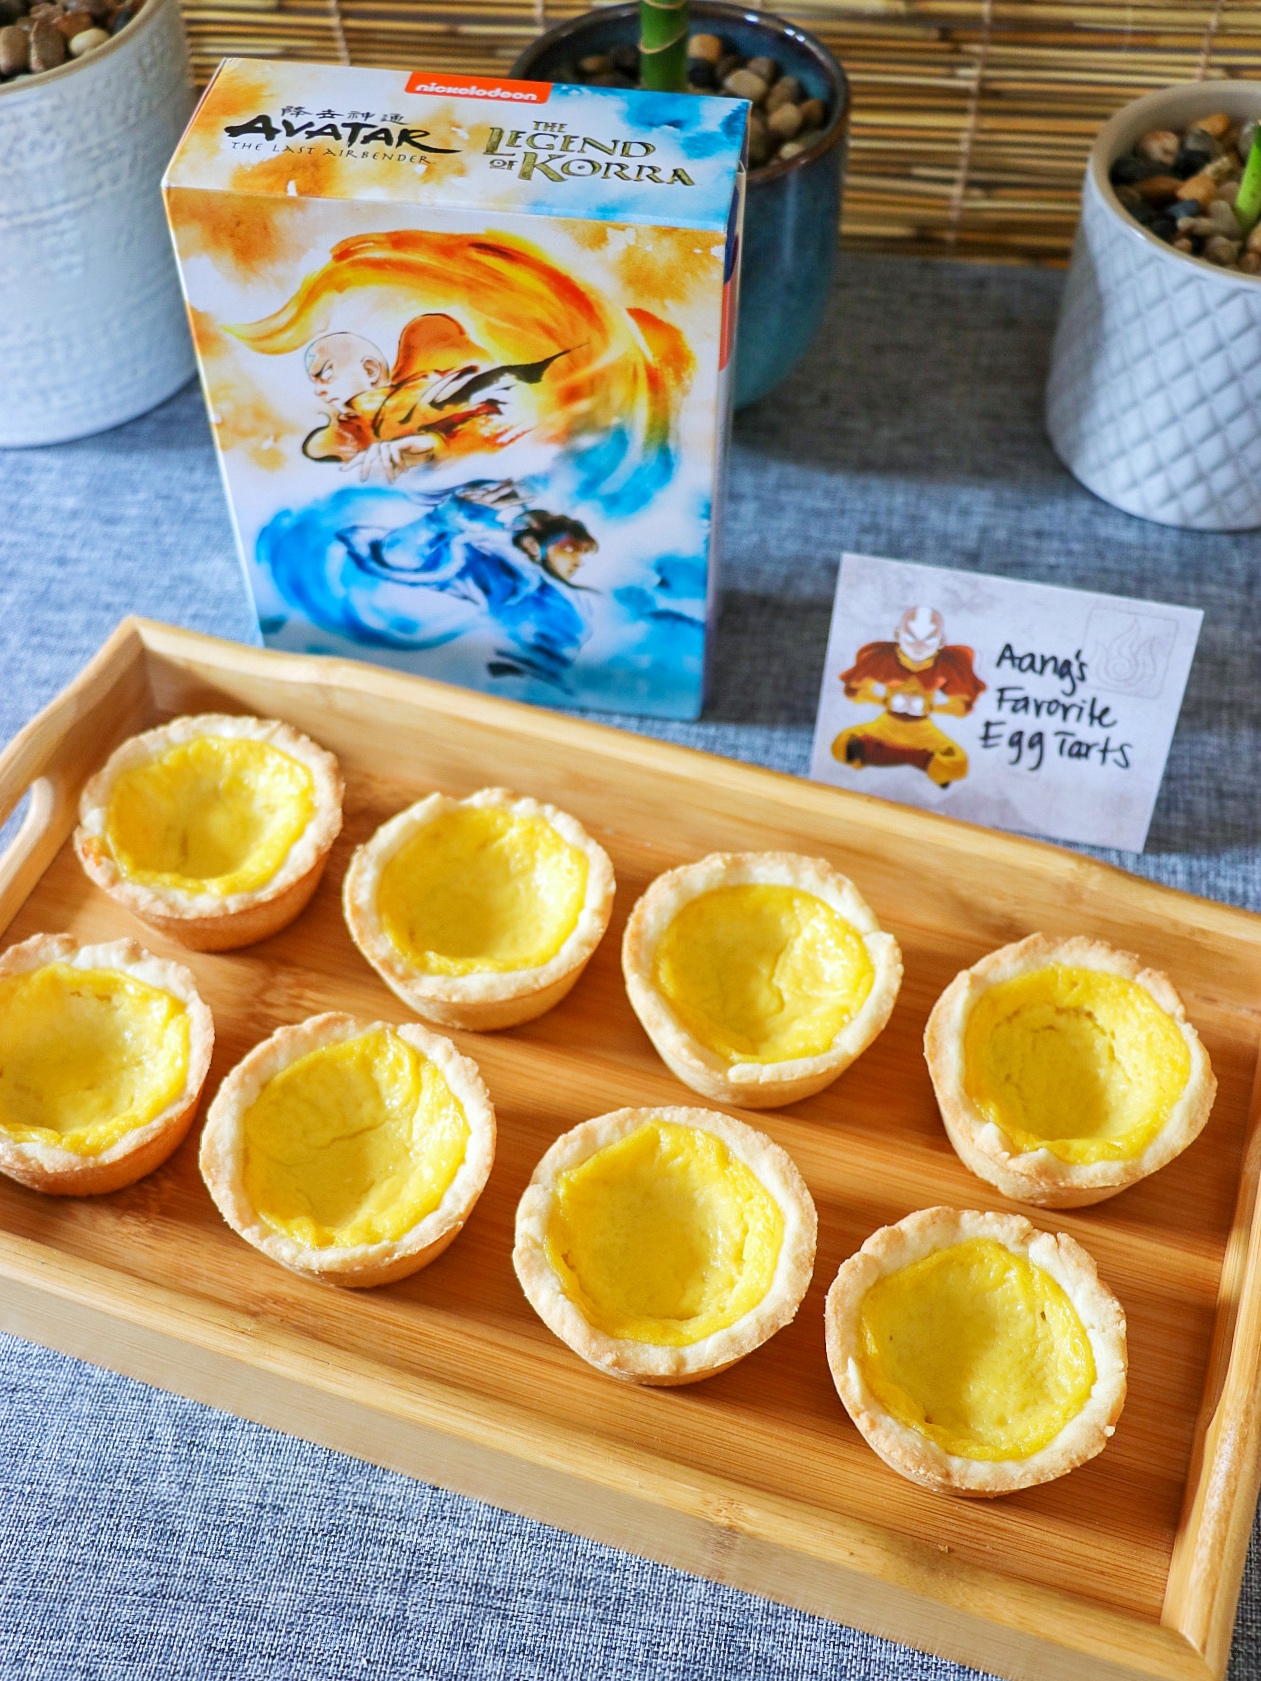 Avatar: The Last Airbender birthday food ideas - Aang's Favorite Egg Tarts